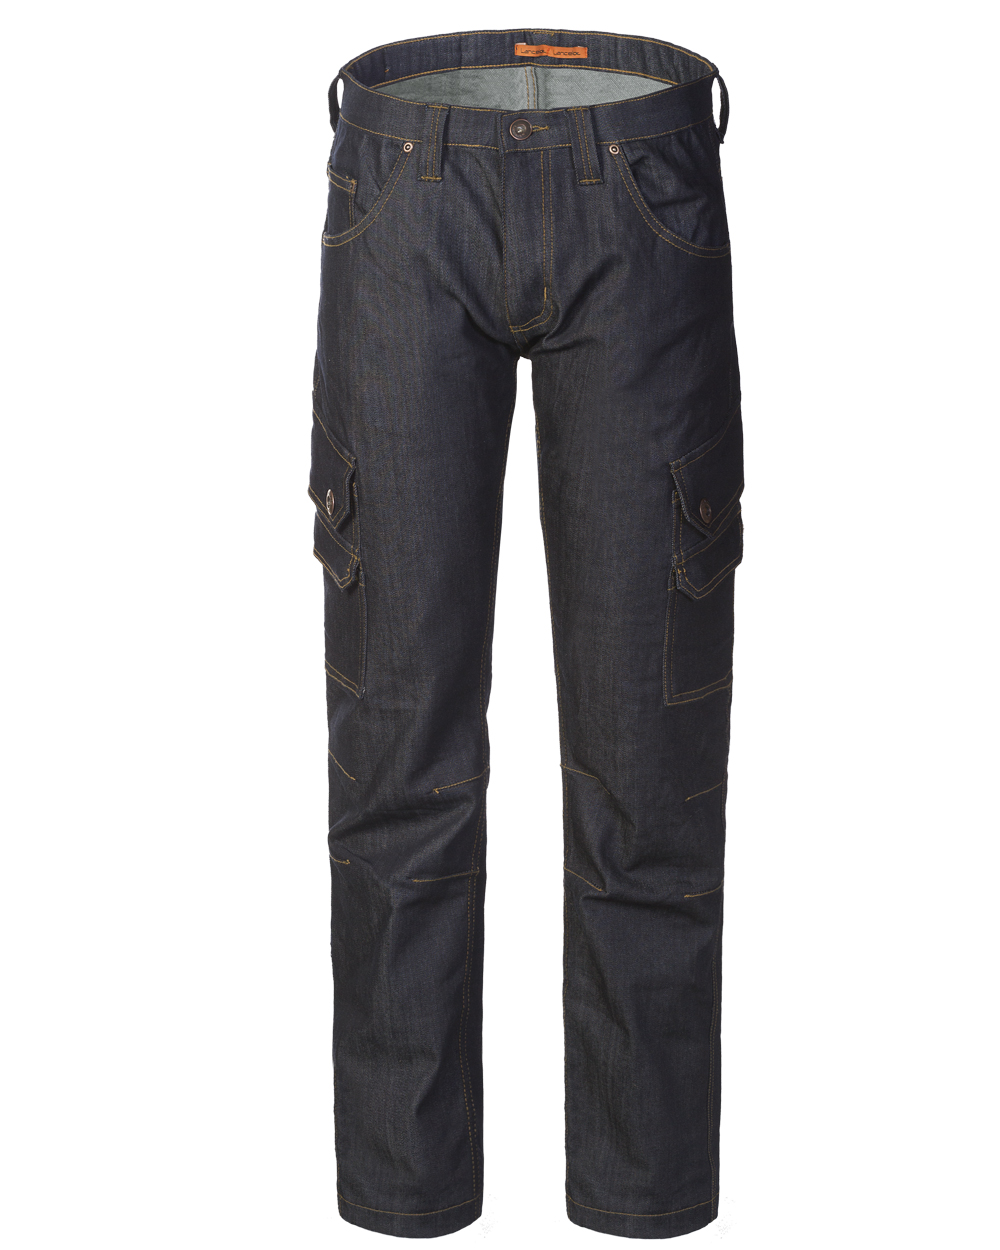 Pantalone jeans cargo tucson 1 pz